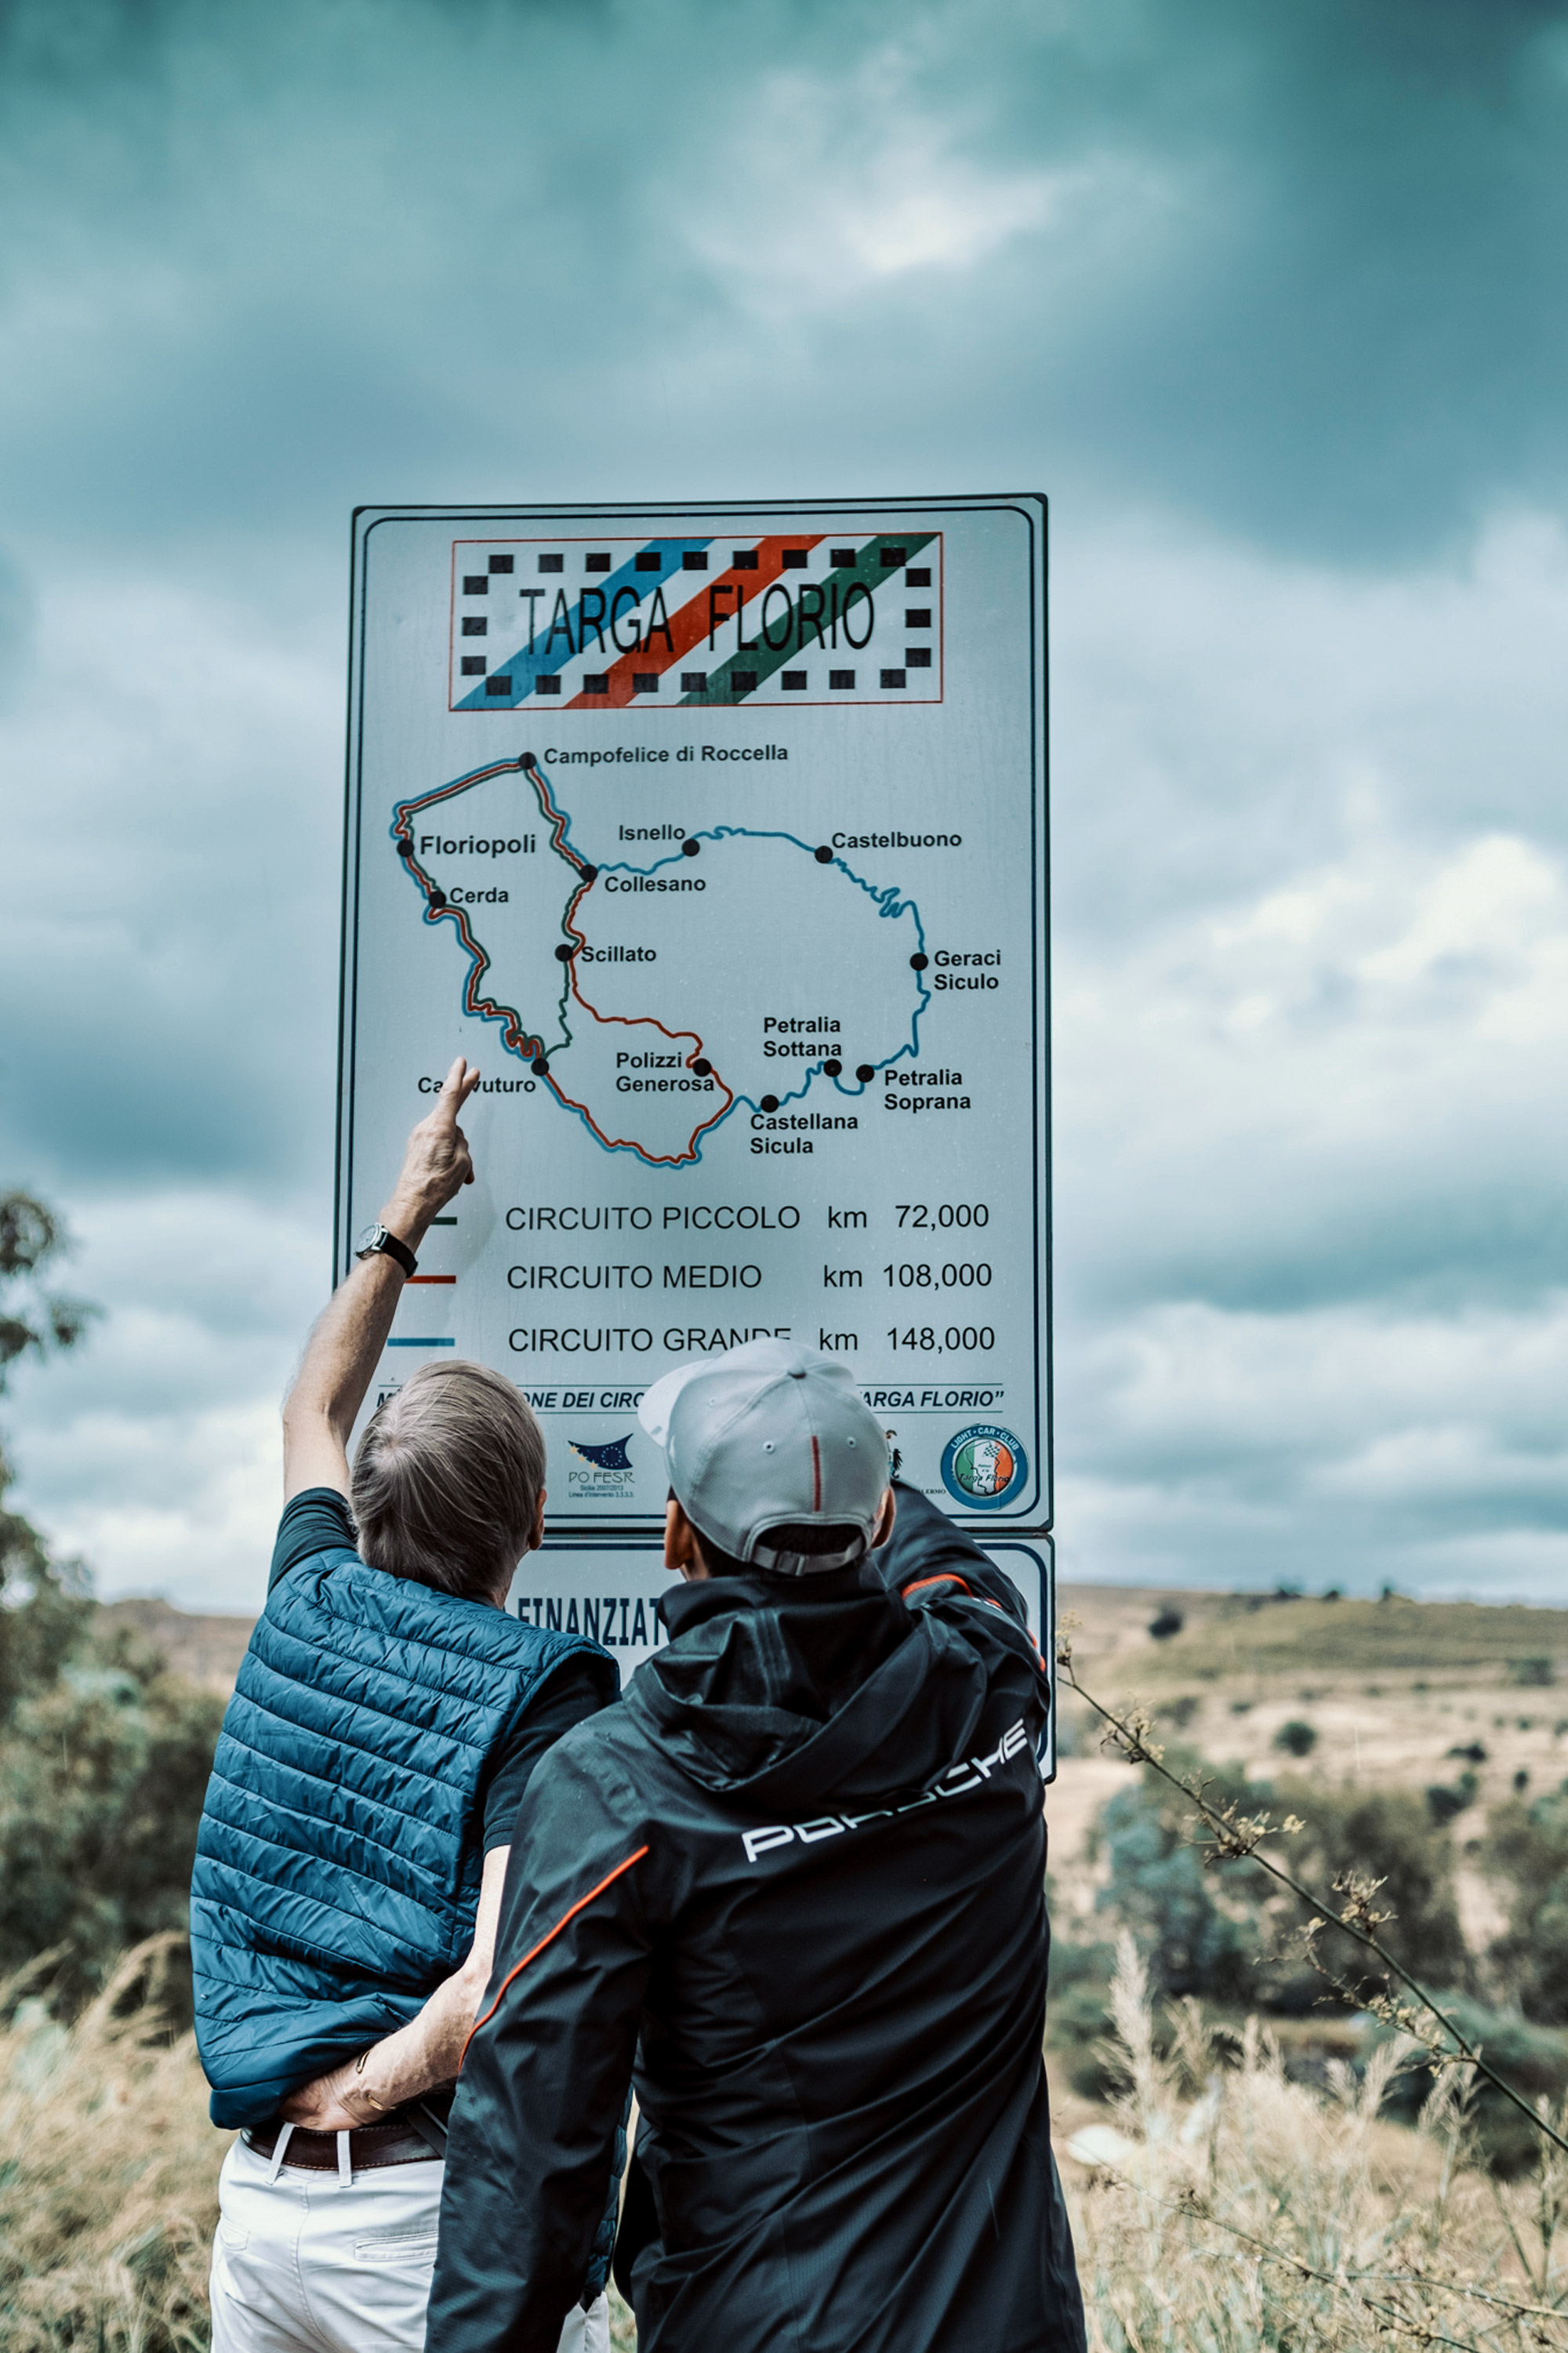 Two men study street sign showing map of Targa Florio